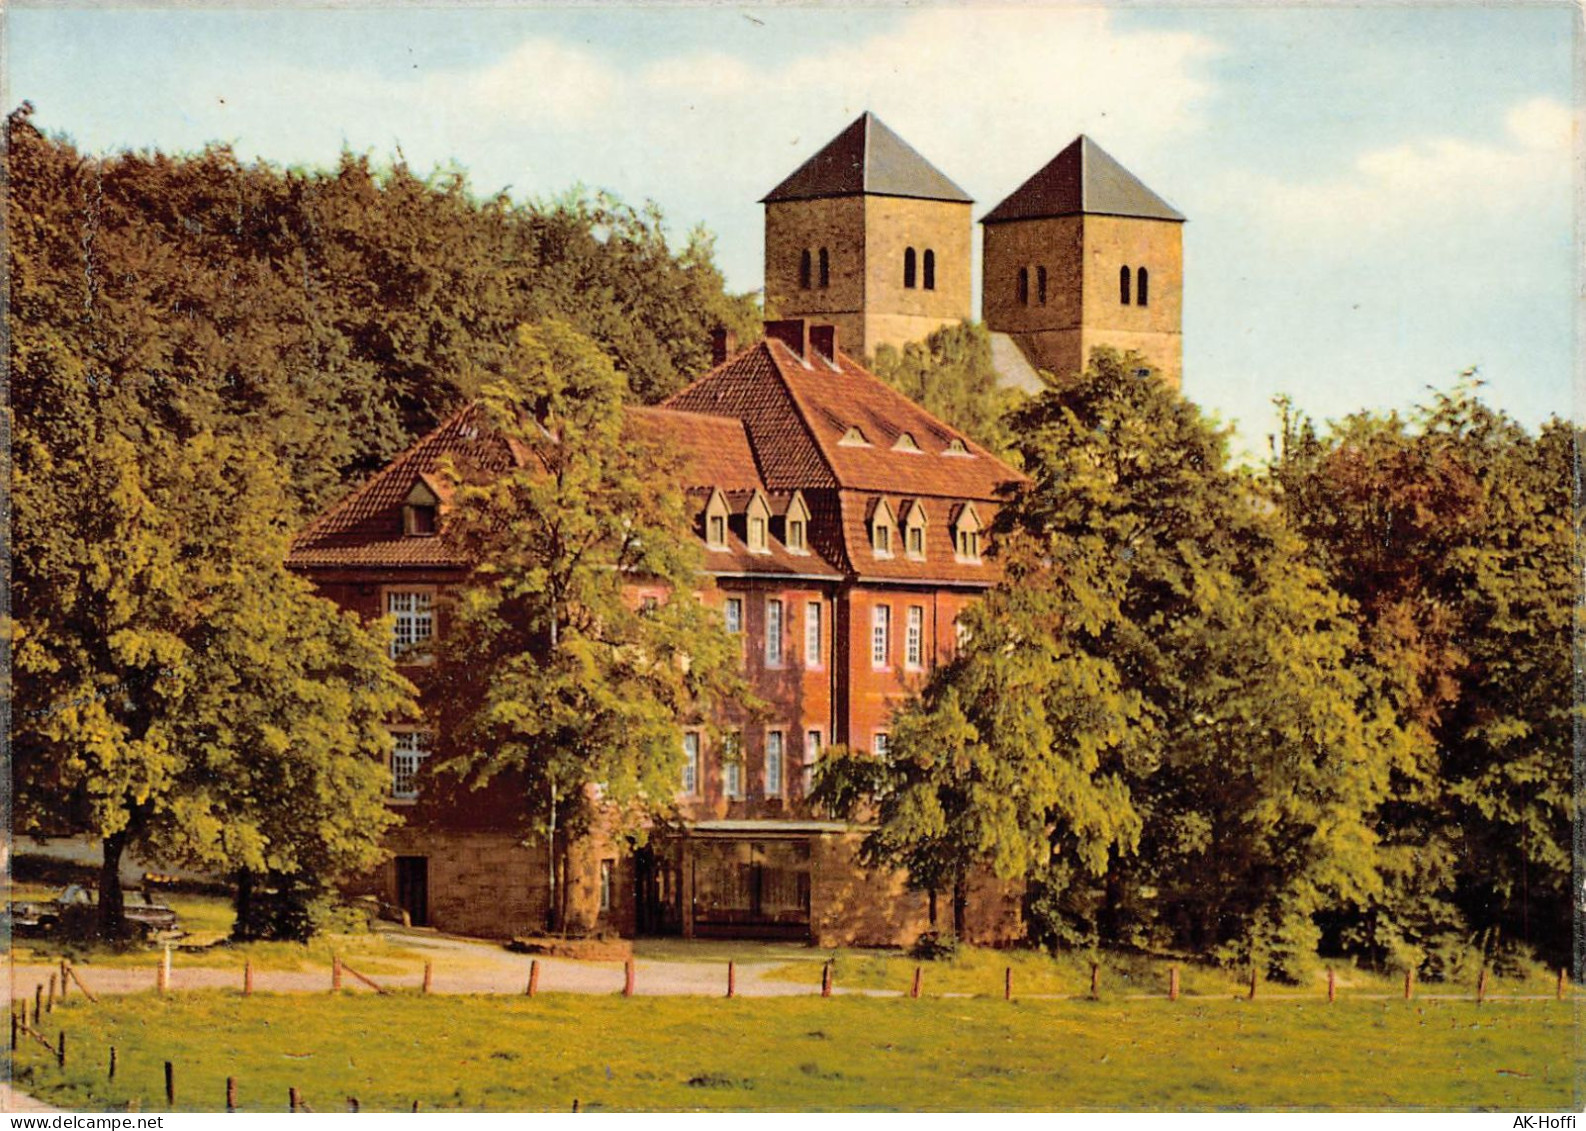 Benediktiner-Abtei Gerleve über Coesfeld (Westf.) - Coesfeld